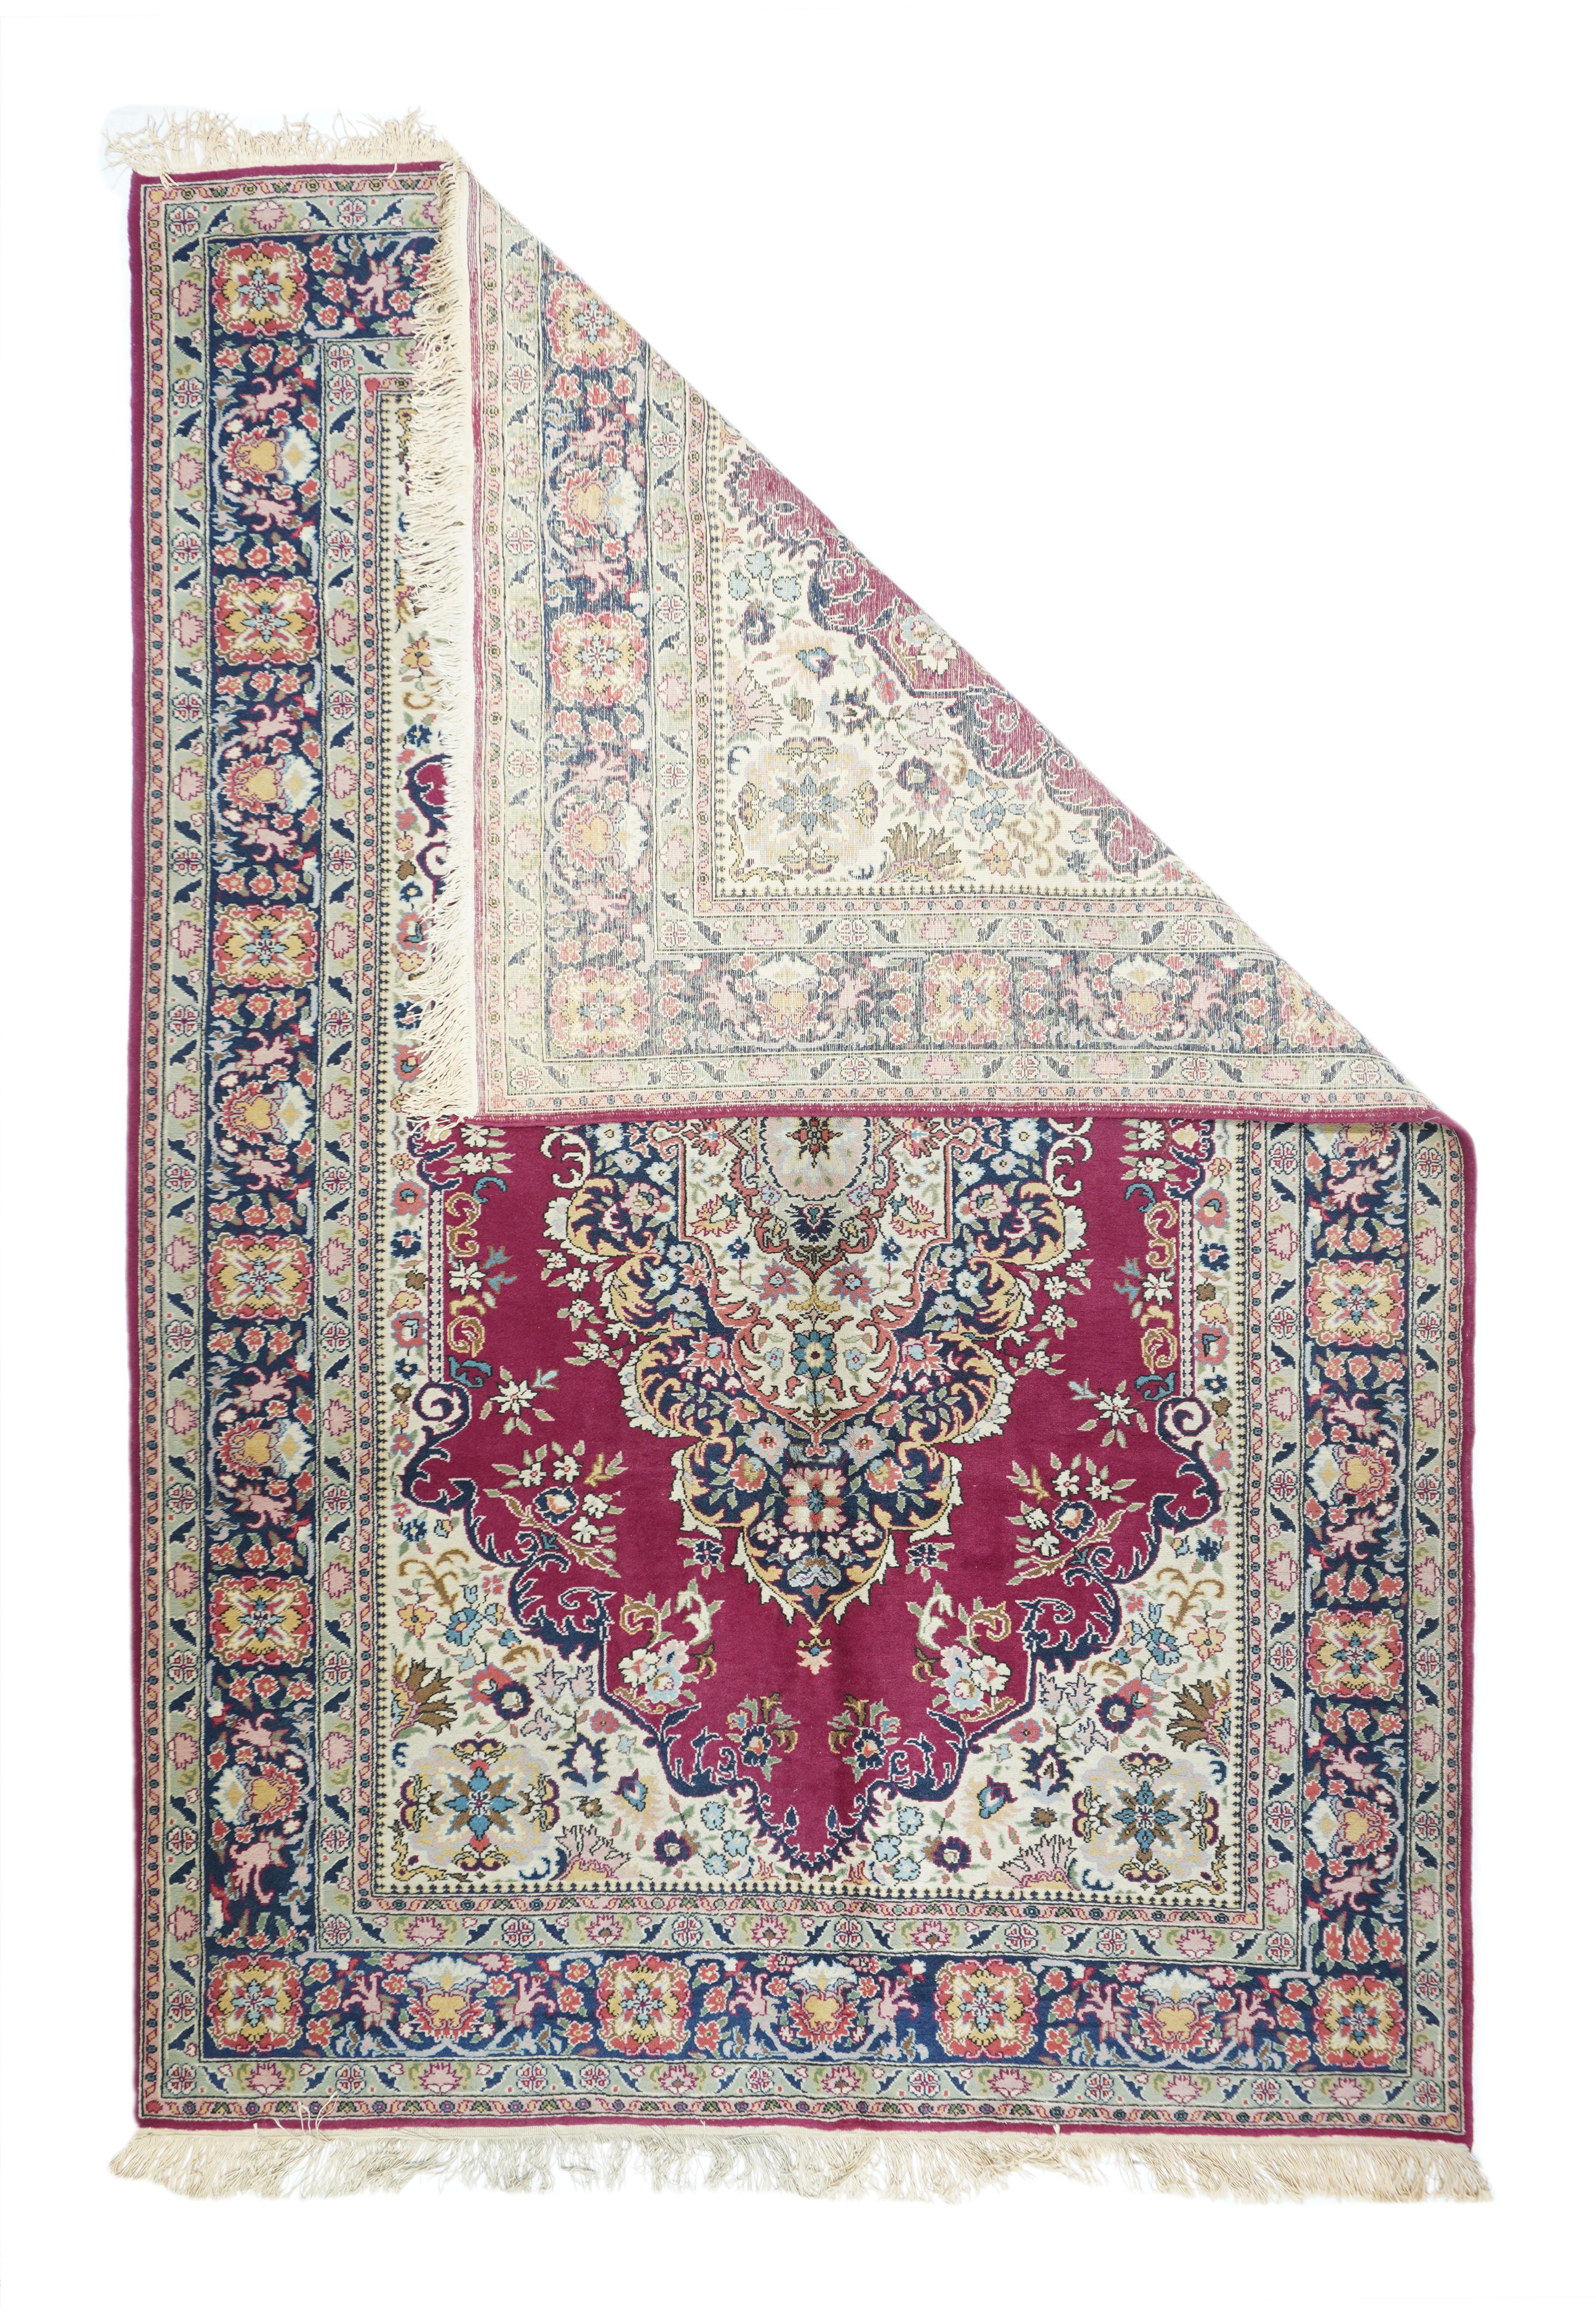 Vintage Turkish rug¬† Measures: 5.10'' x 9'.